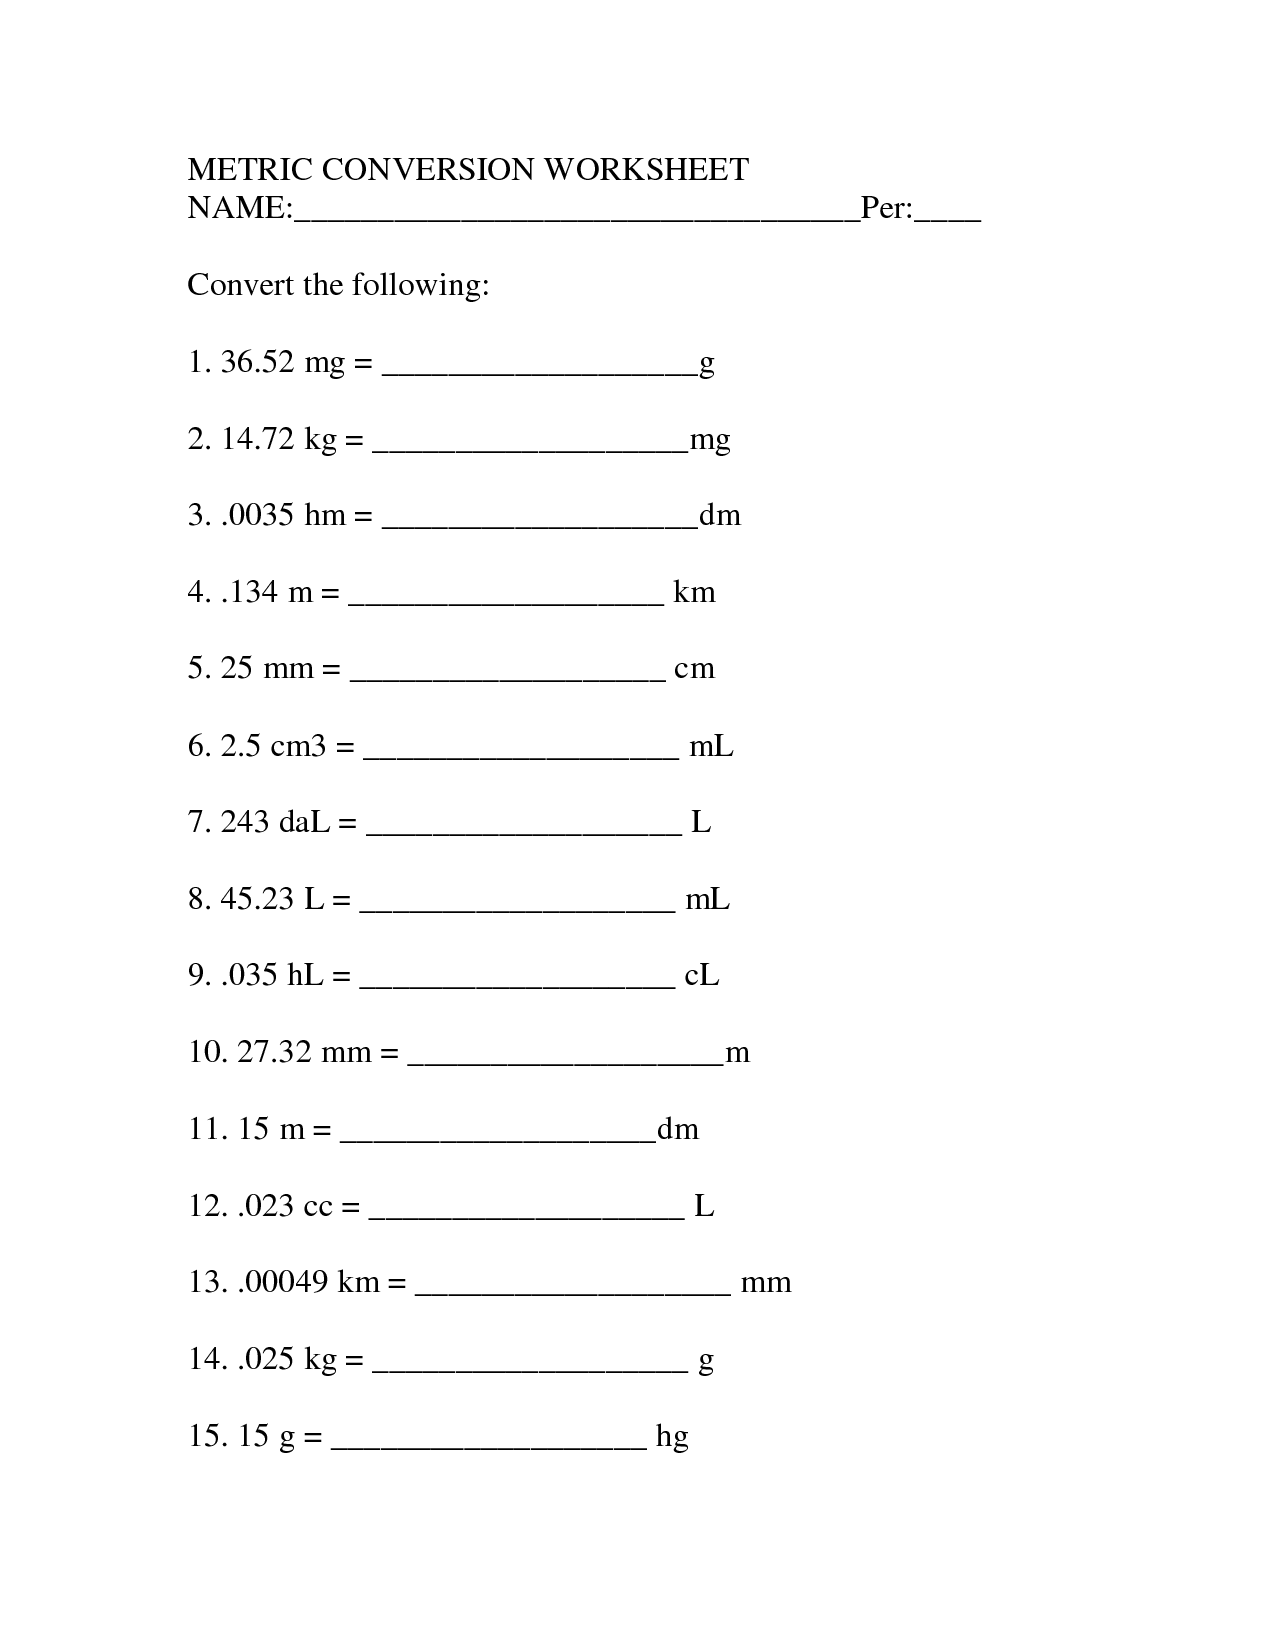 16 Best Images of Measurement Conversion Worksheets 5th Grade